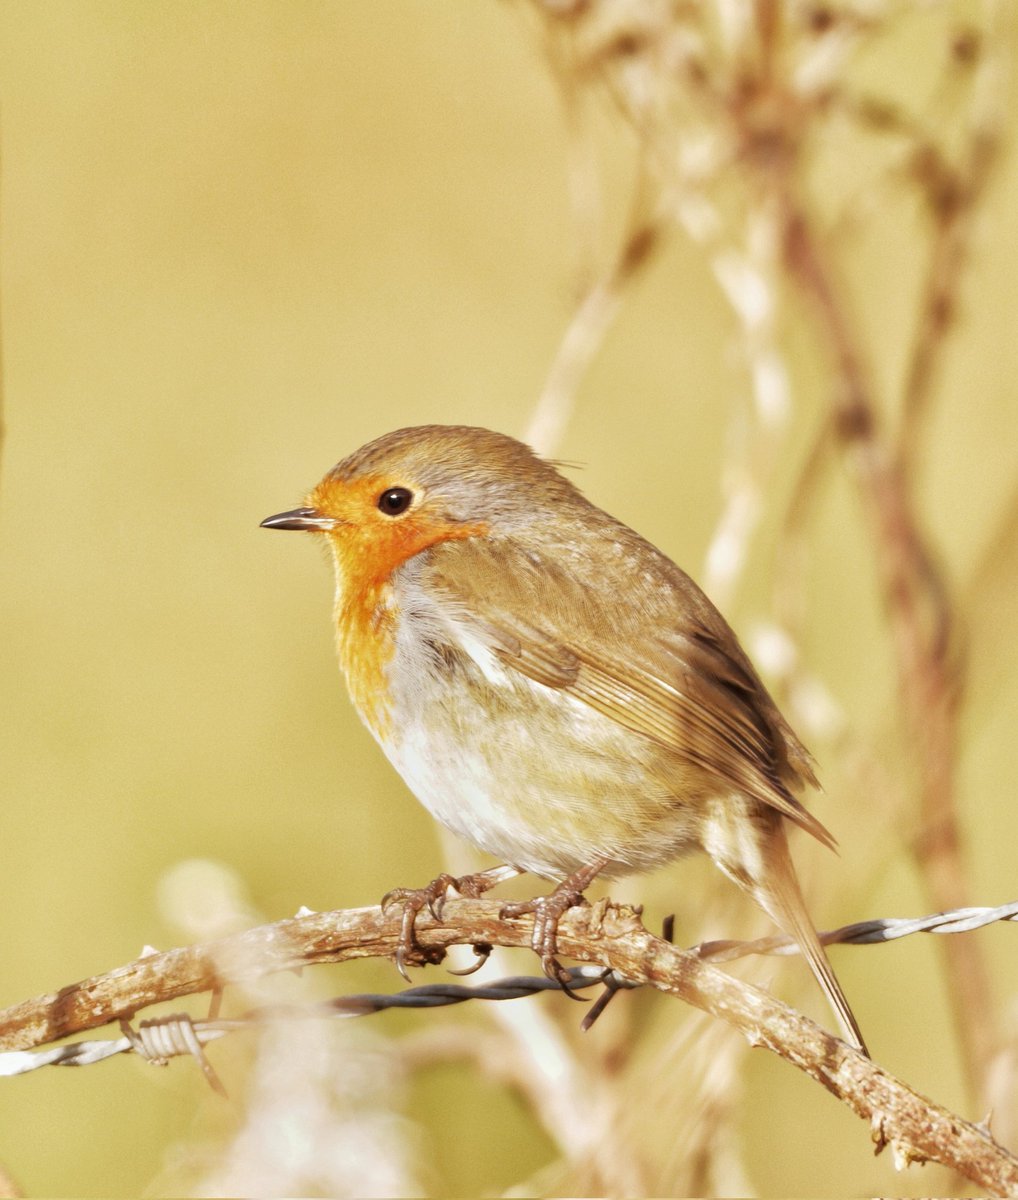 A wee Robin from the weekend for #nationalrobinday #birdphotography #scottishborders #twitternaturecommunity #naturephotography